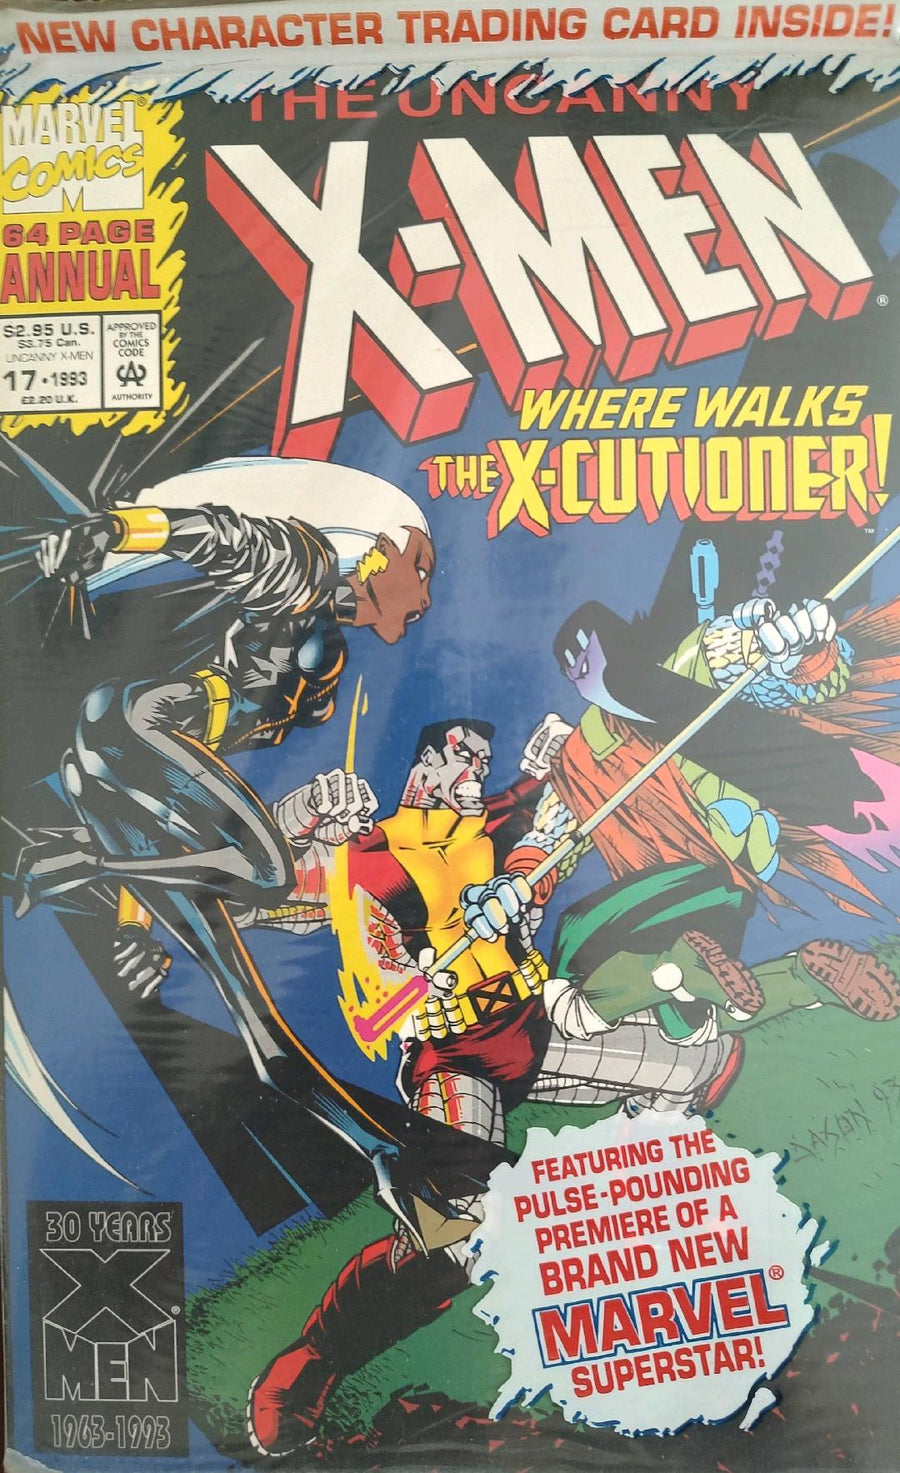 The Uncanny X-Men Annual #17